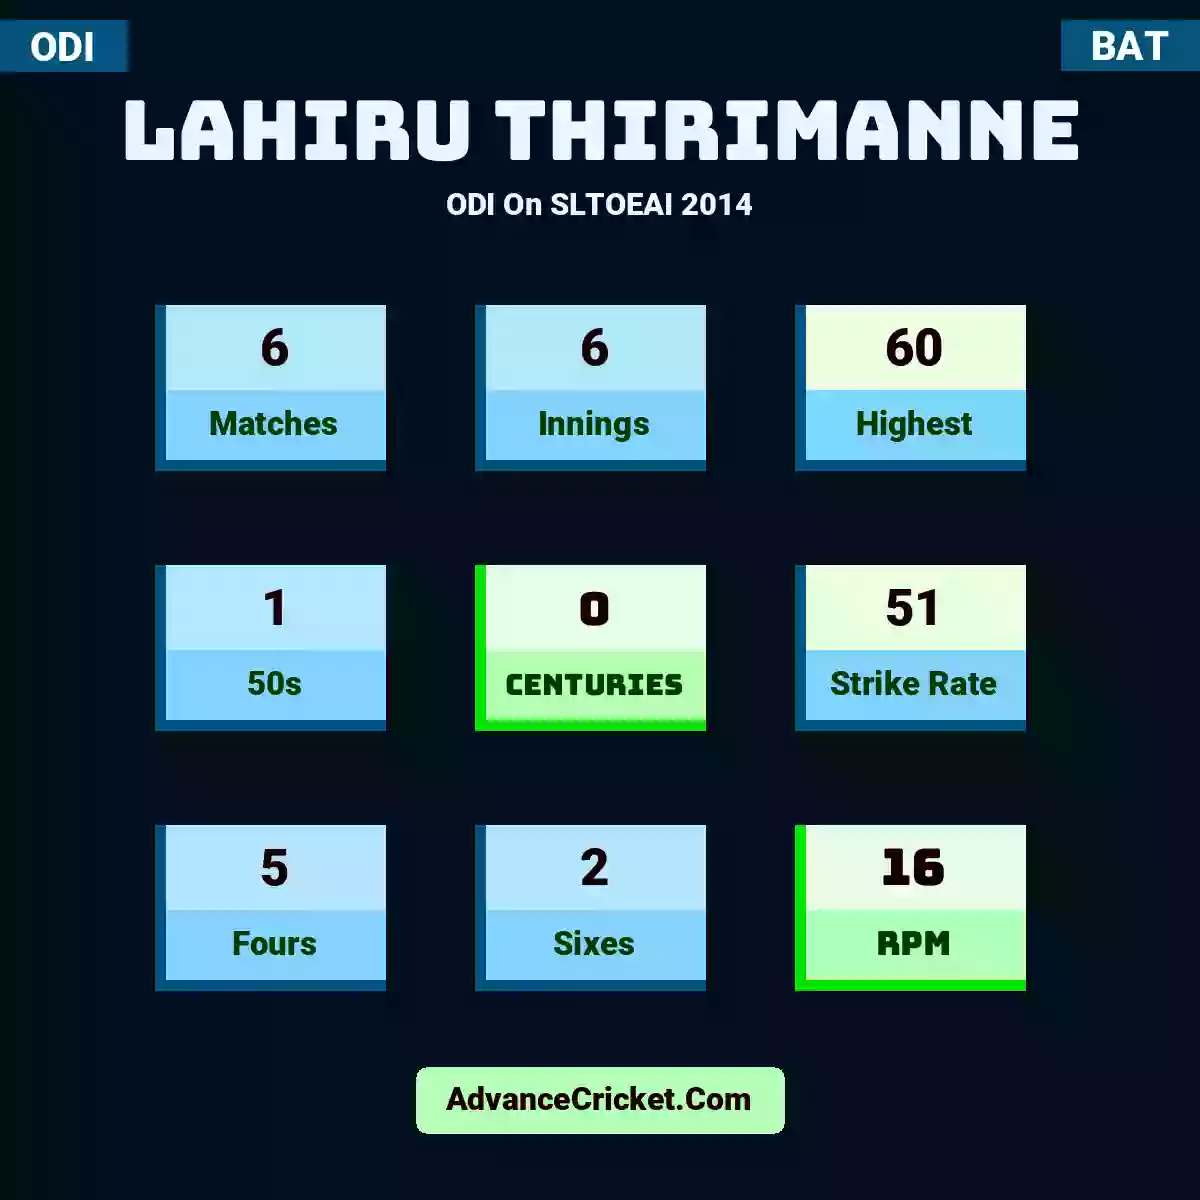 Lahiru Thirimanne ODI  On SLTOEAI 2014, Lahiru Thirimanne played 6 matches, scored 60 runs as highest, 1 half-centuries, and 0 centuries, with a strike rate of 51. L.Thirimanne hit 5 fours and 2 sixes, with an RPM of 16.